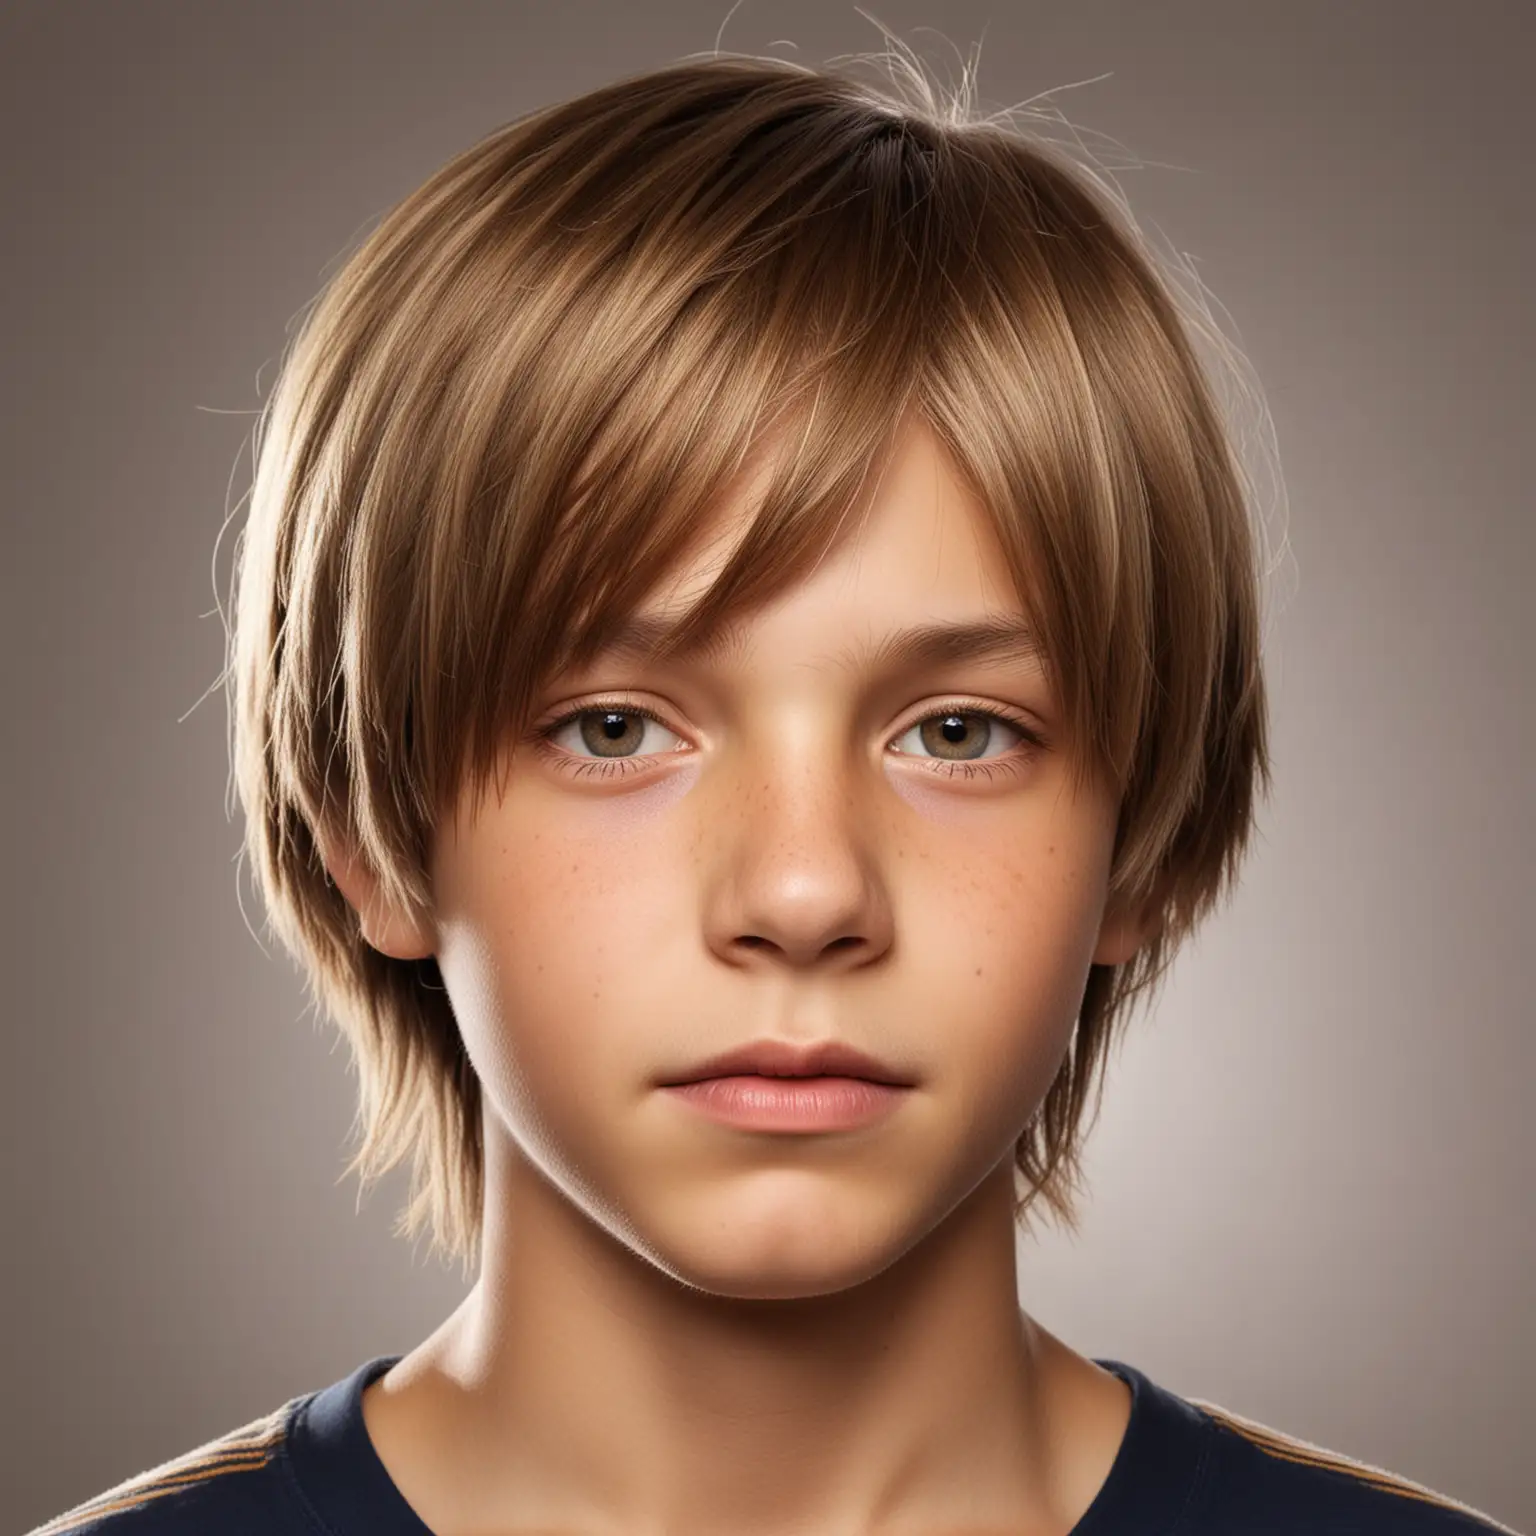 Portrait of a ThirteenYearOld Boy with ShoulderLength Light Brown Hair